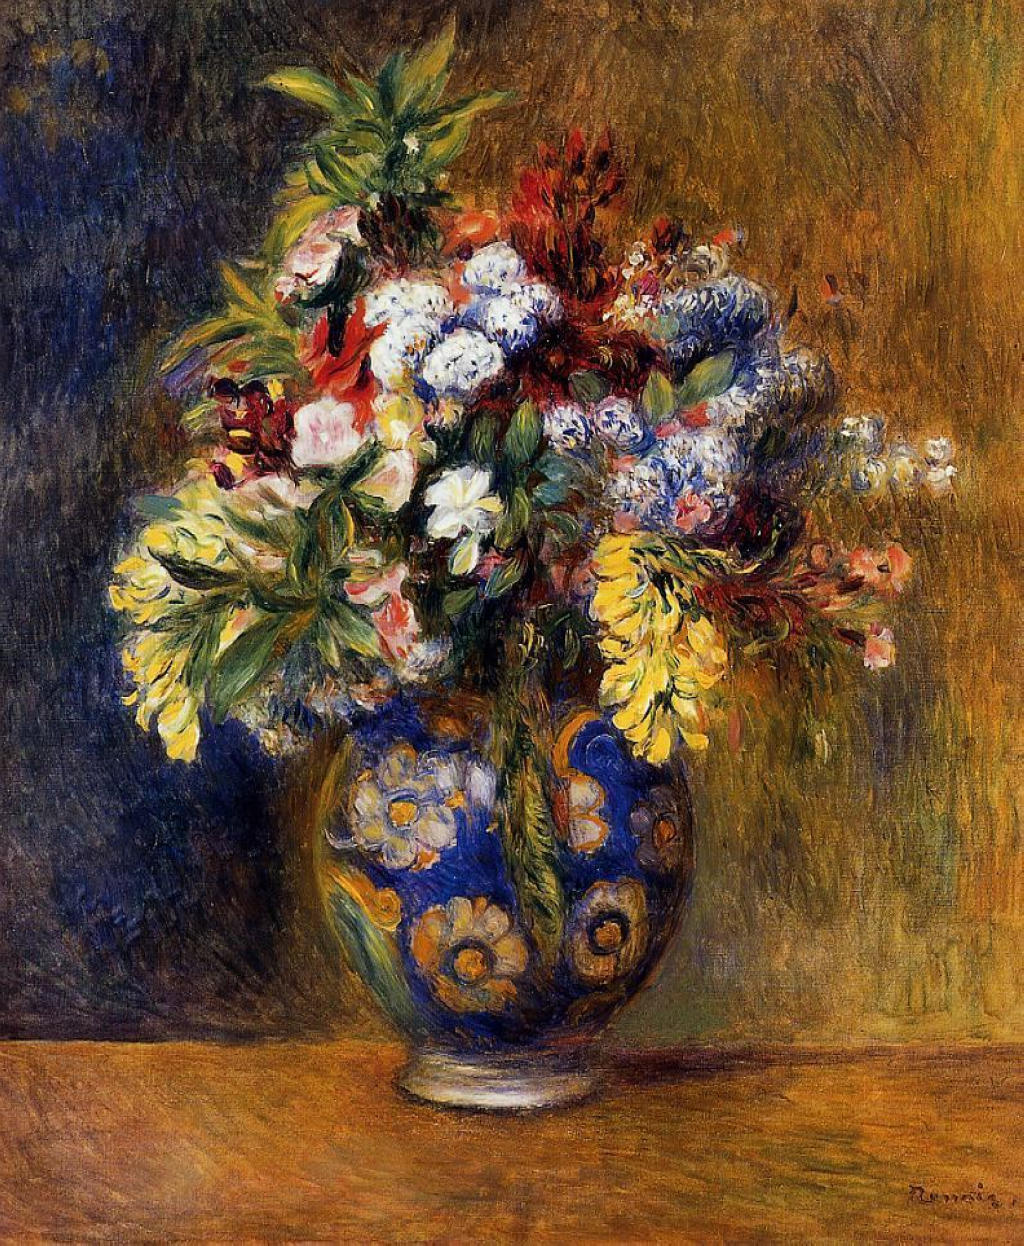 Pierre-Auguste Renoir Flowers in a Vase, 1878 01 oil painting reproduction